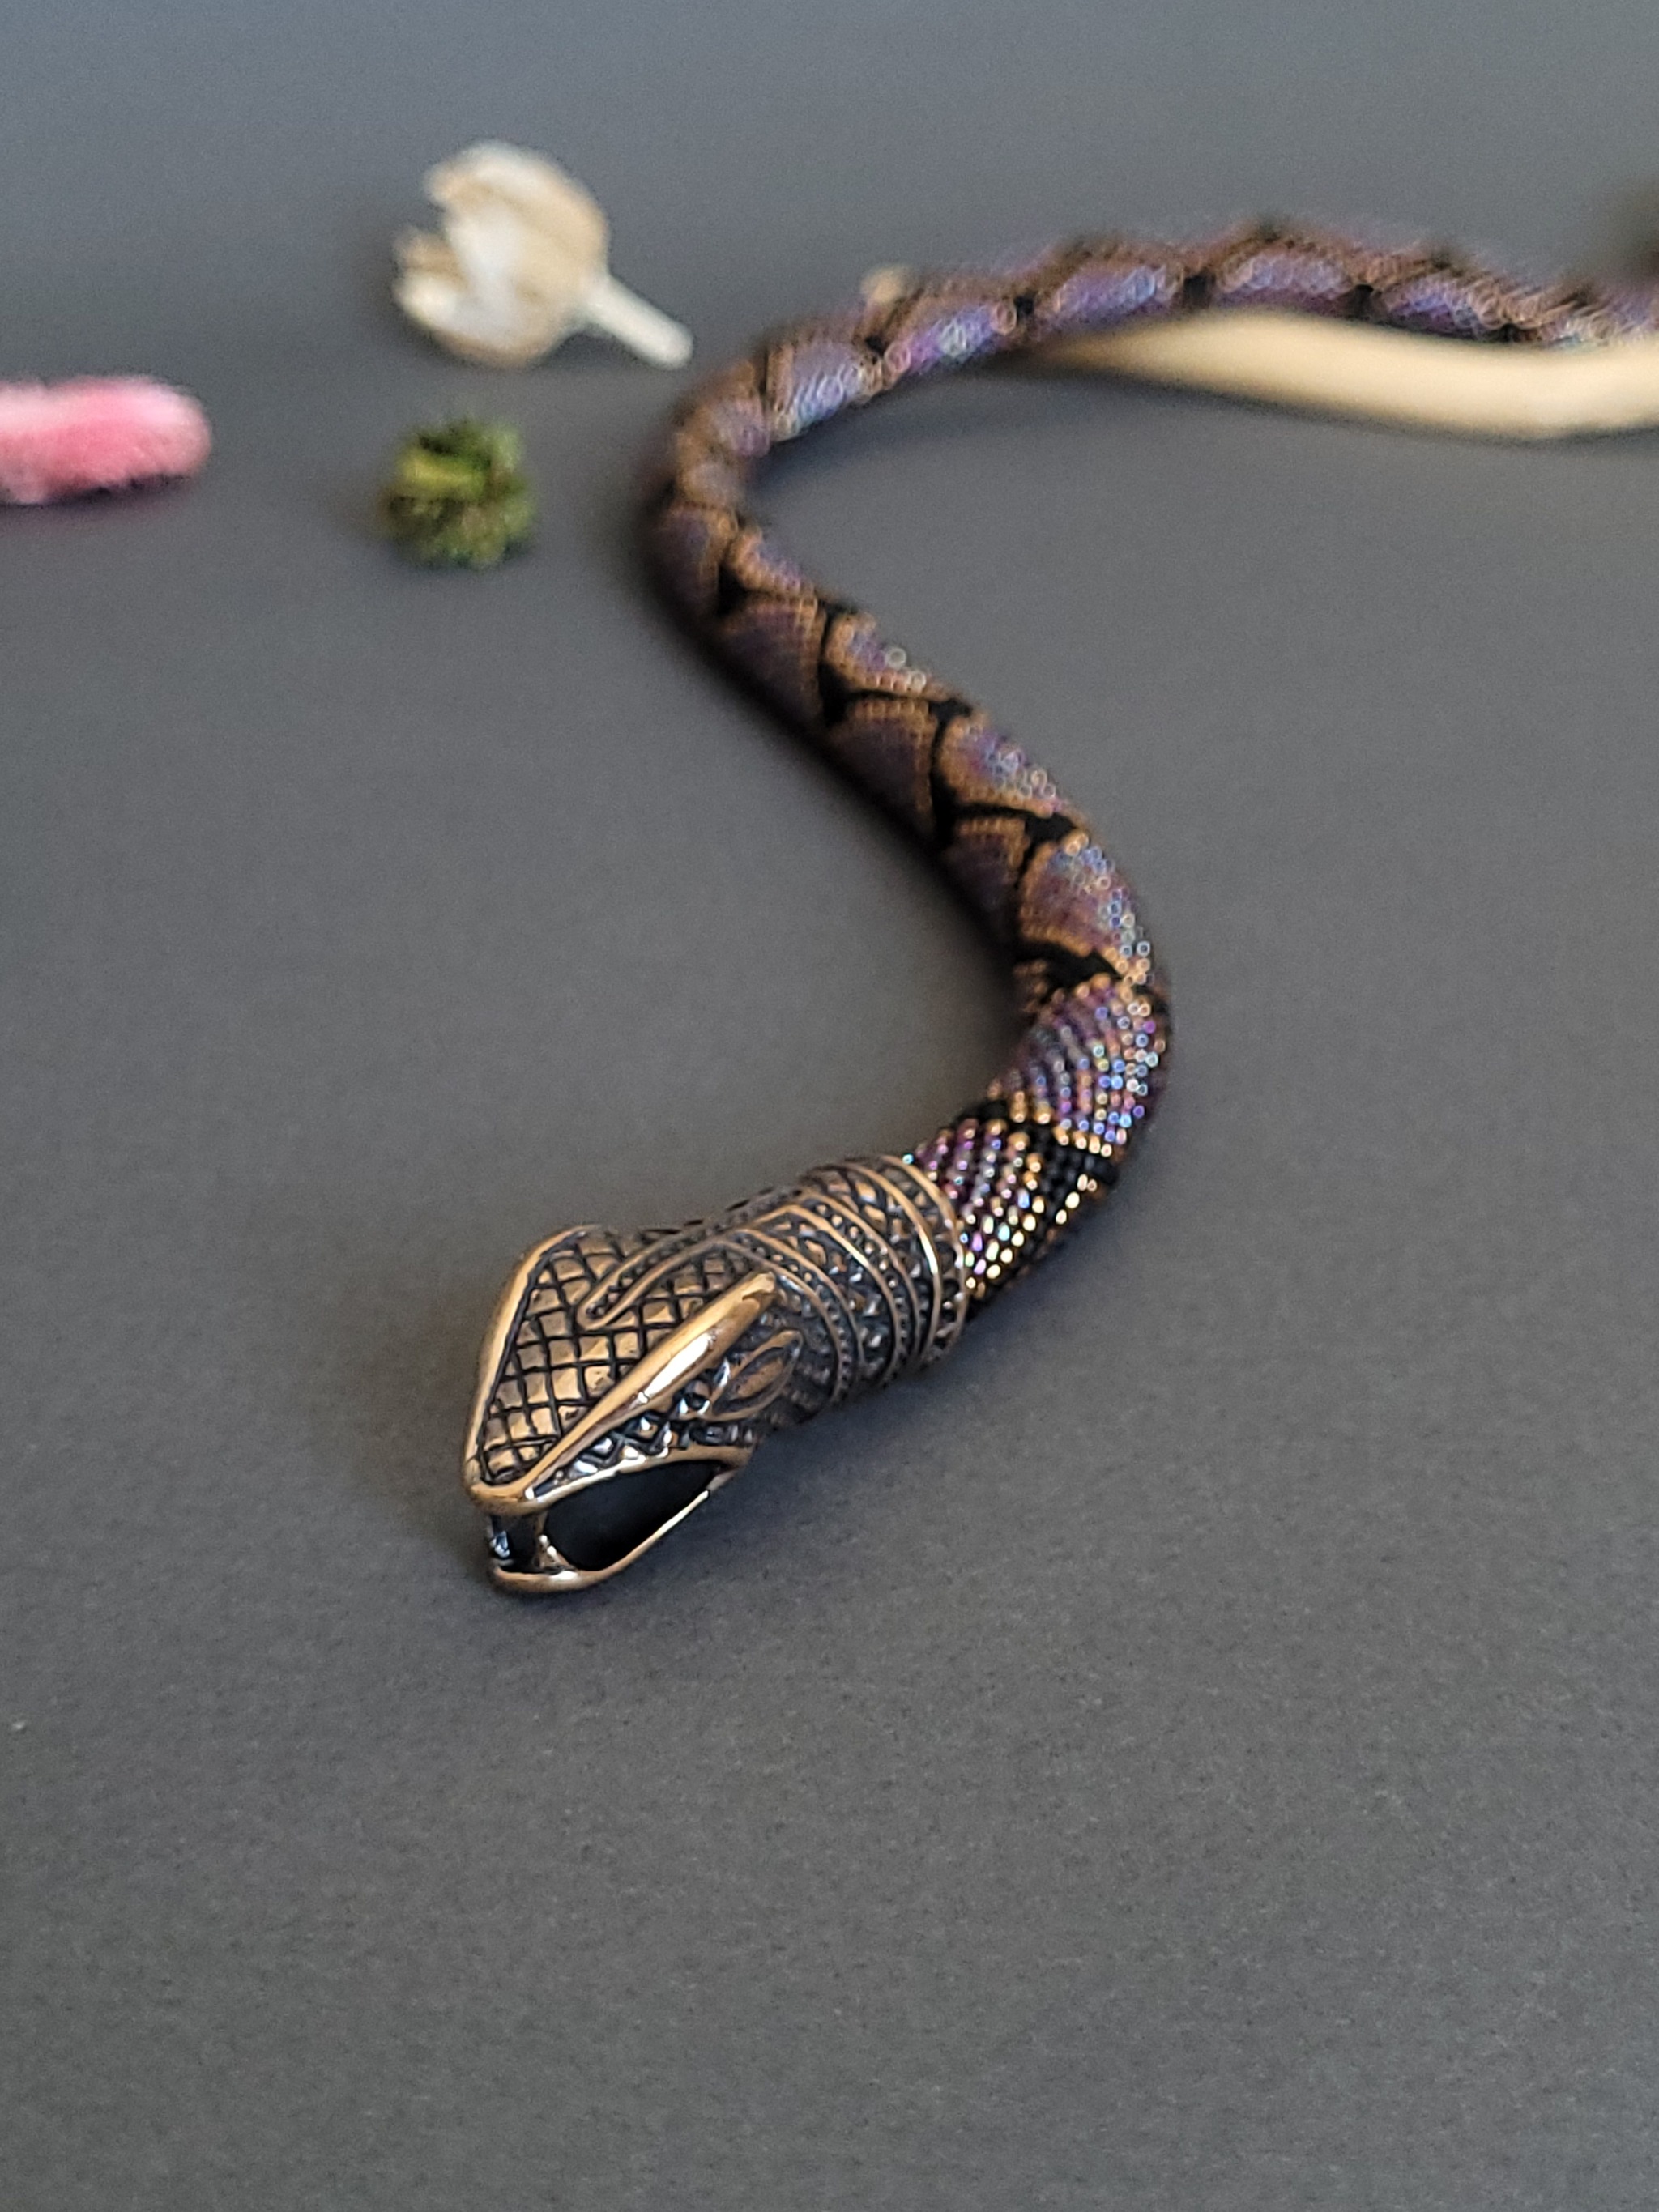 Змейка из бисера. Схема сборки - КлуКлу | Бисер, Плетение, Рукоделие